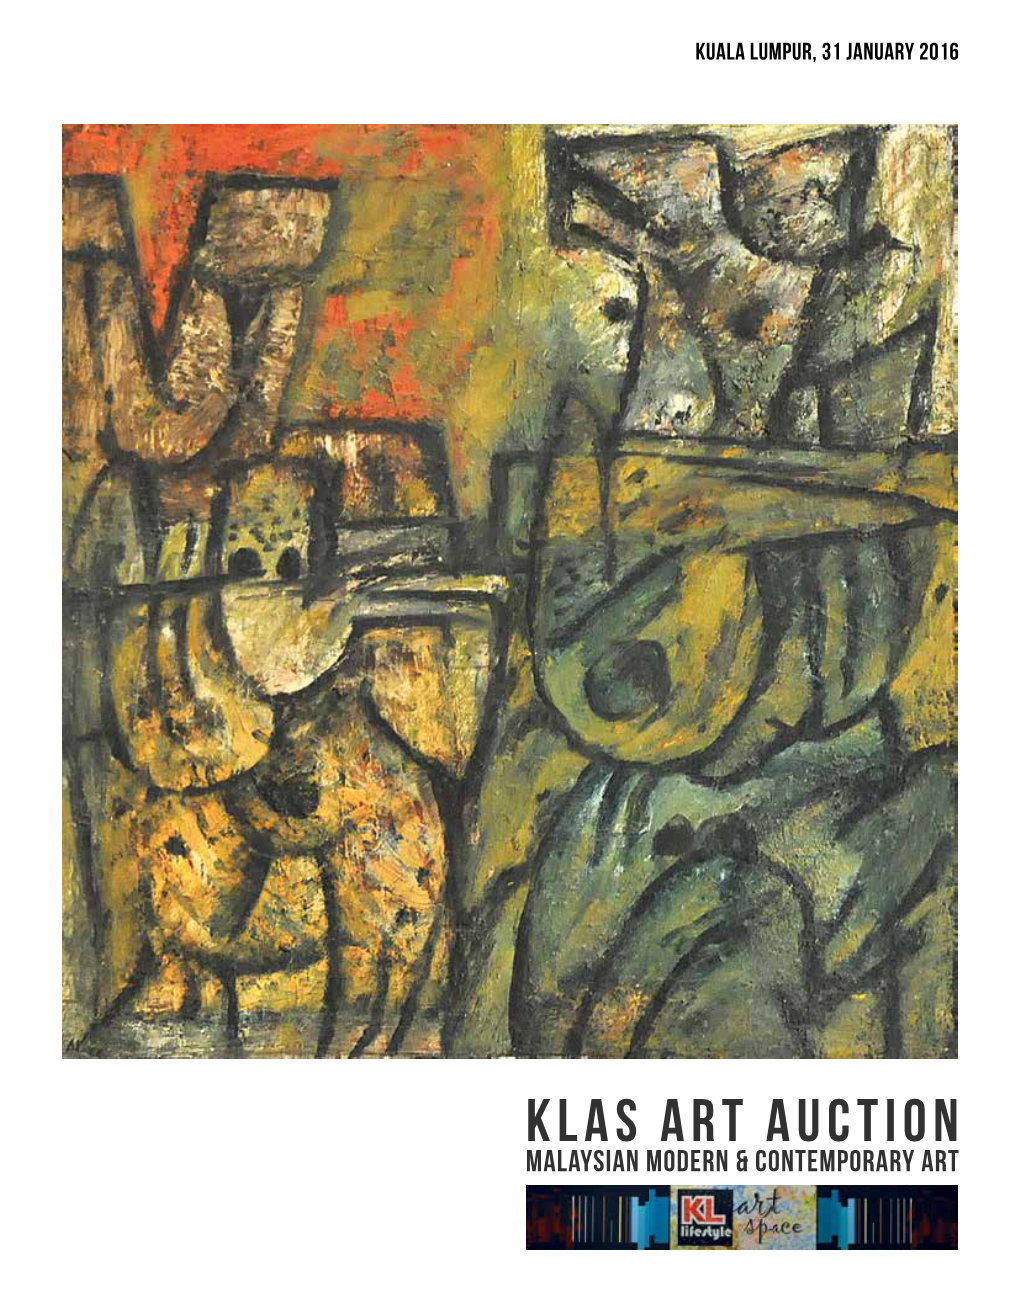 KLAS Art Auction Malaysian Modern & Contemporary Art KLAS Art Auction 2016 Malaysian Modern & Contemporary Art Edition XIX